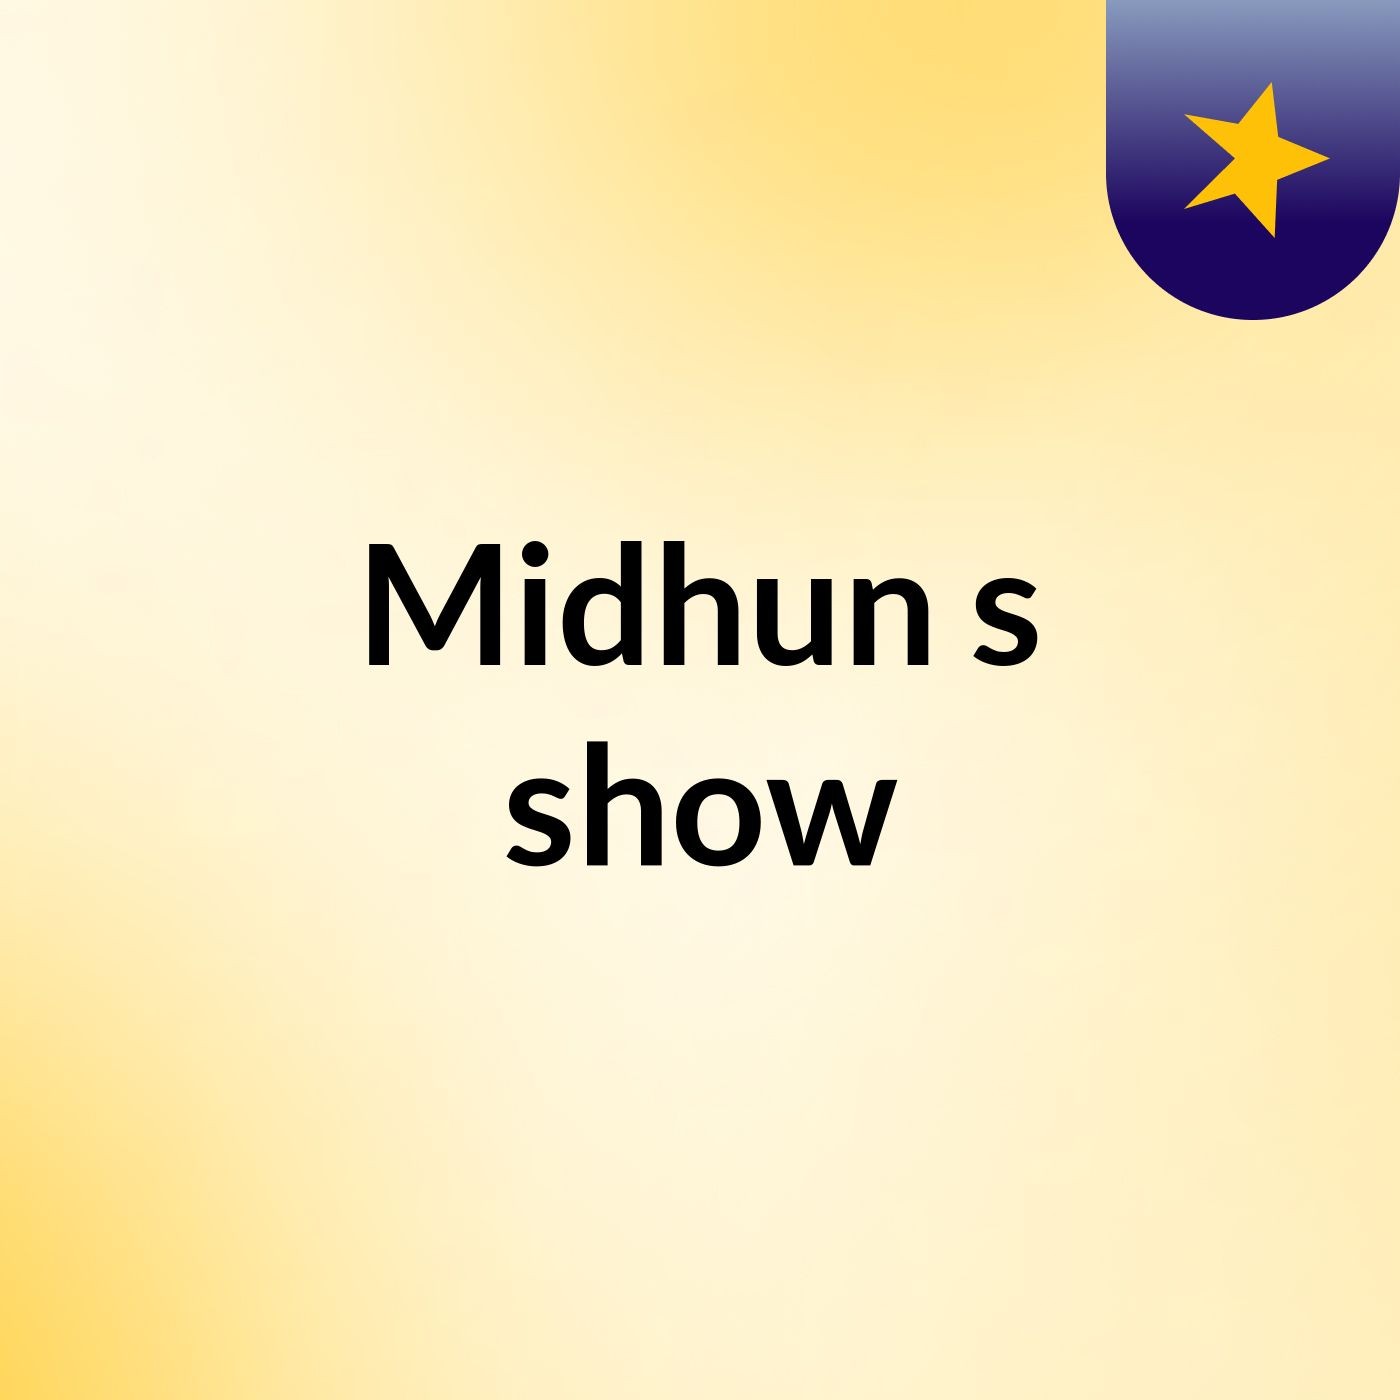 Midhun's show